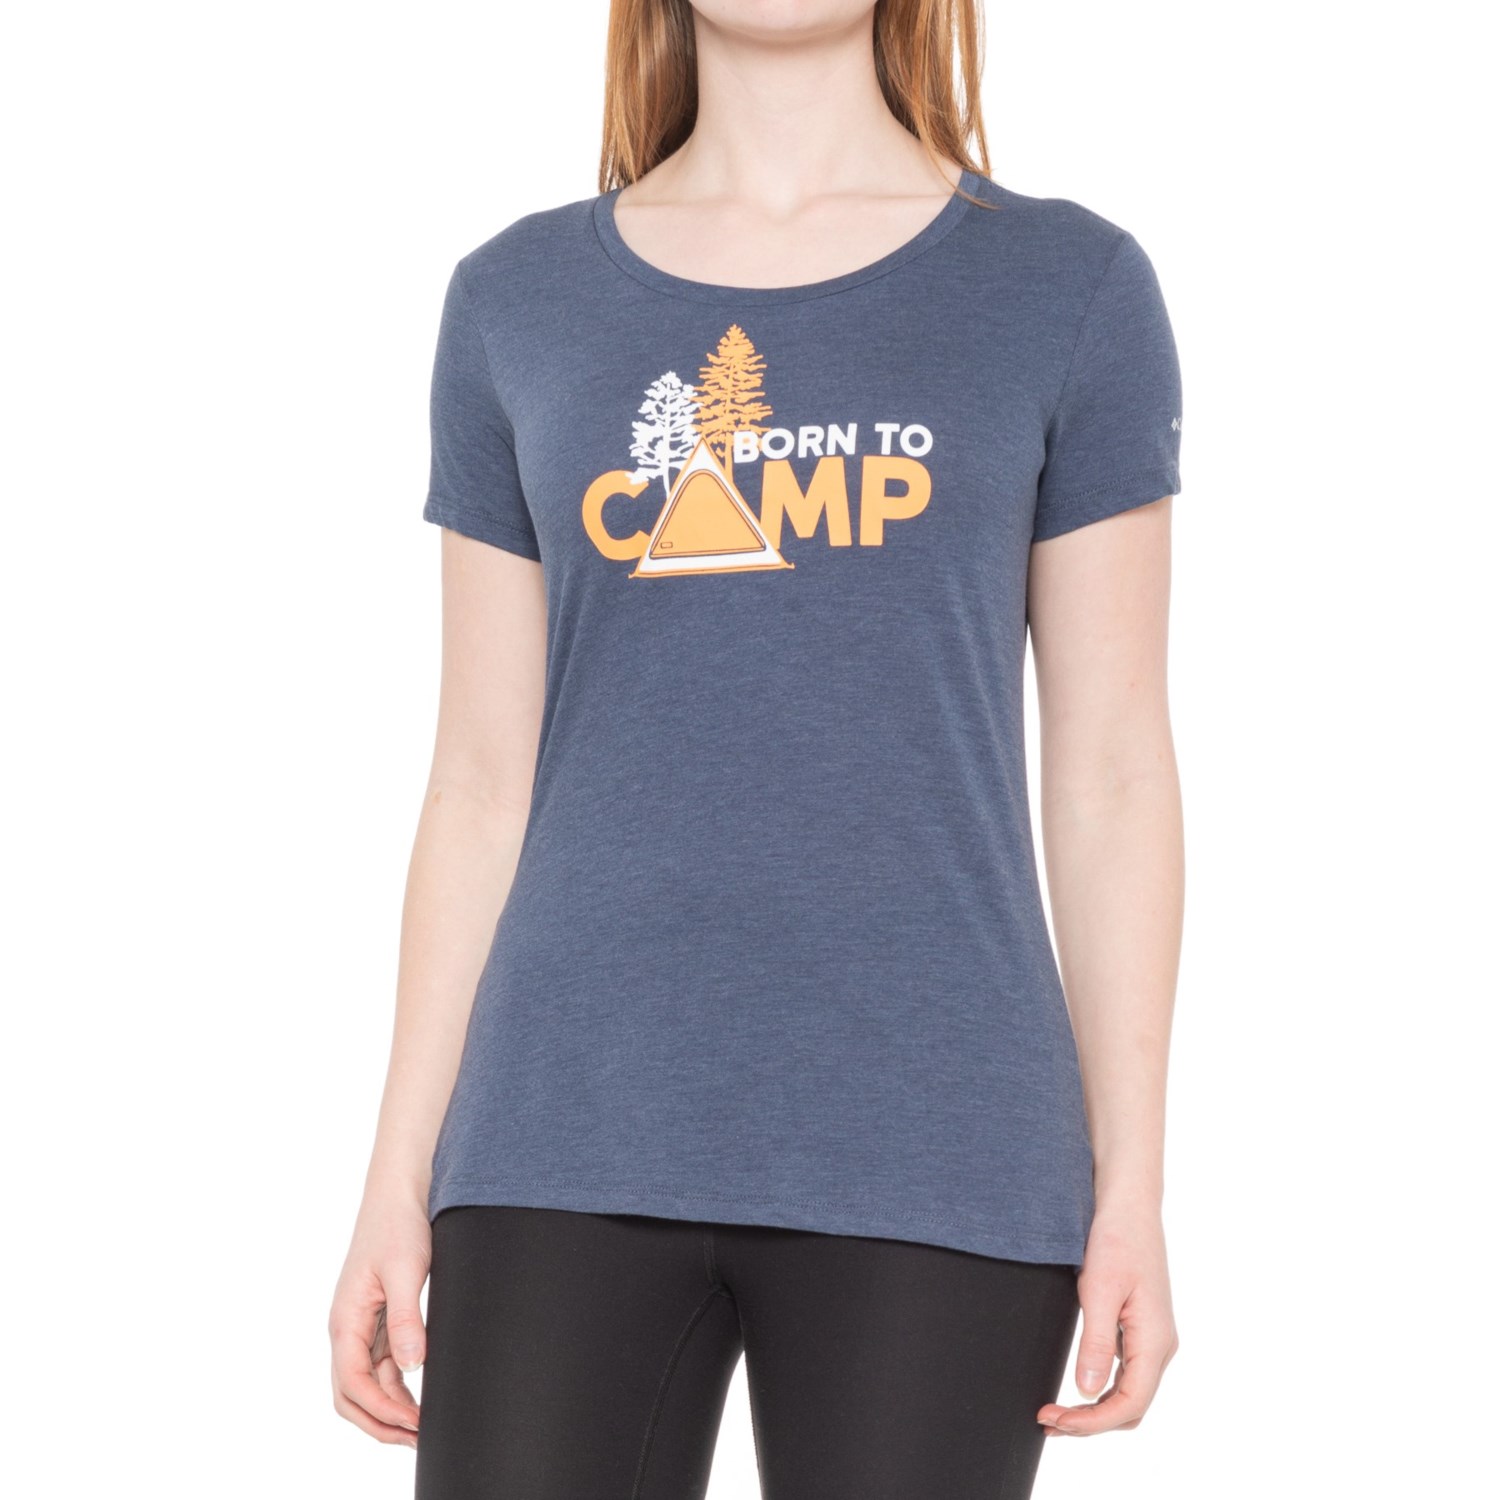 () RrAX|[cEFA fCW[ fCY OtBbN T-Vc - V[g X[u Columbia Sportswear Daisy Days Graphic T-Shirt - Short Sleeve Nocturnal Heather, Born To Camp